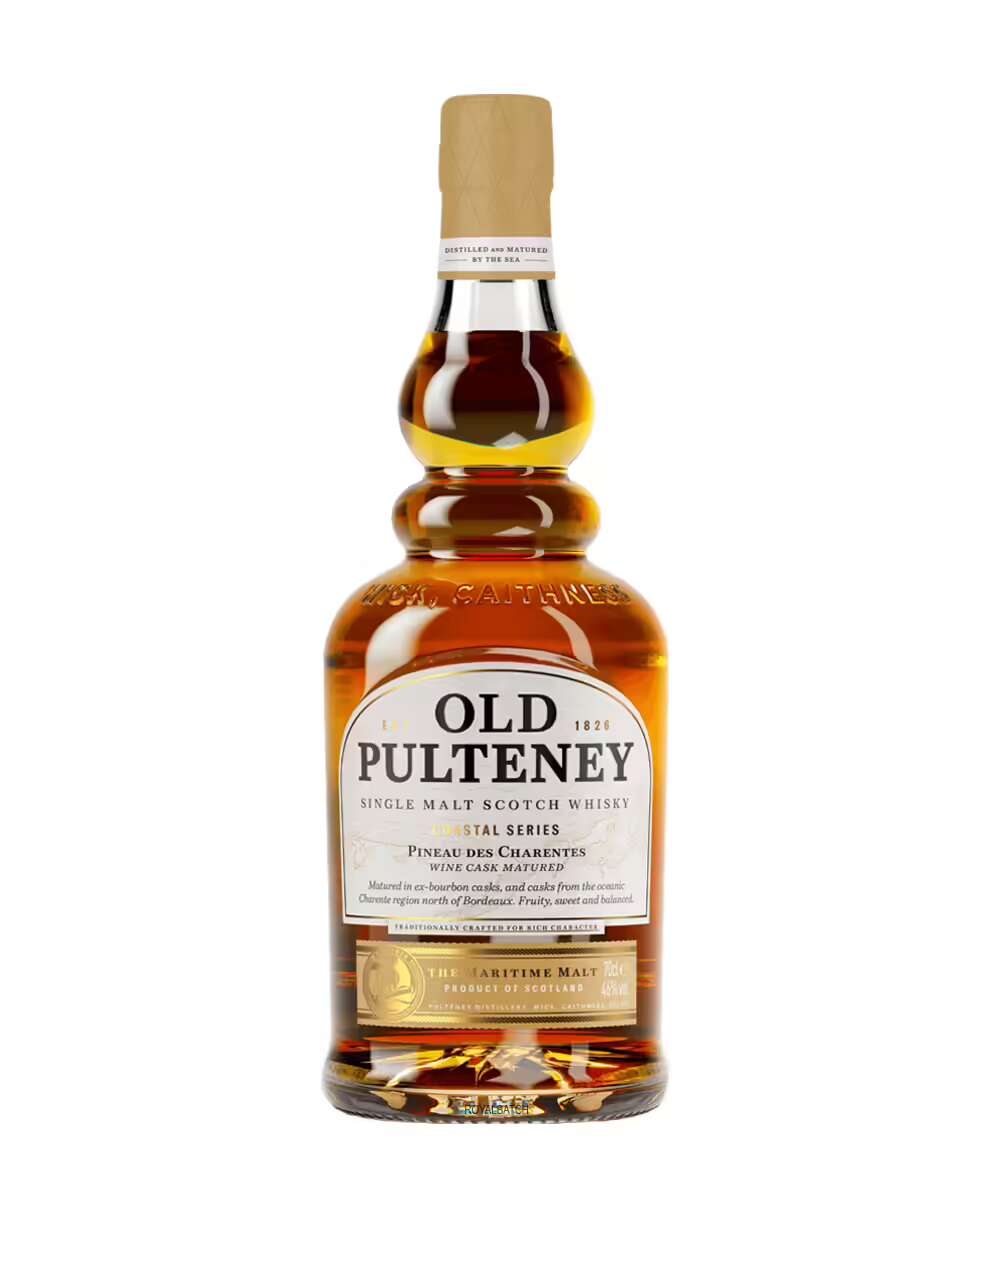 Old Pulteney Pineau Des Charentes Coastal Series Scotch Whisky